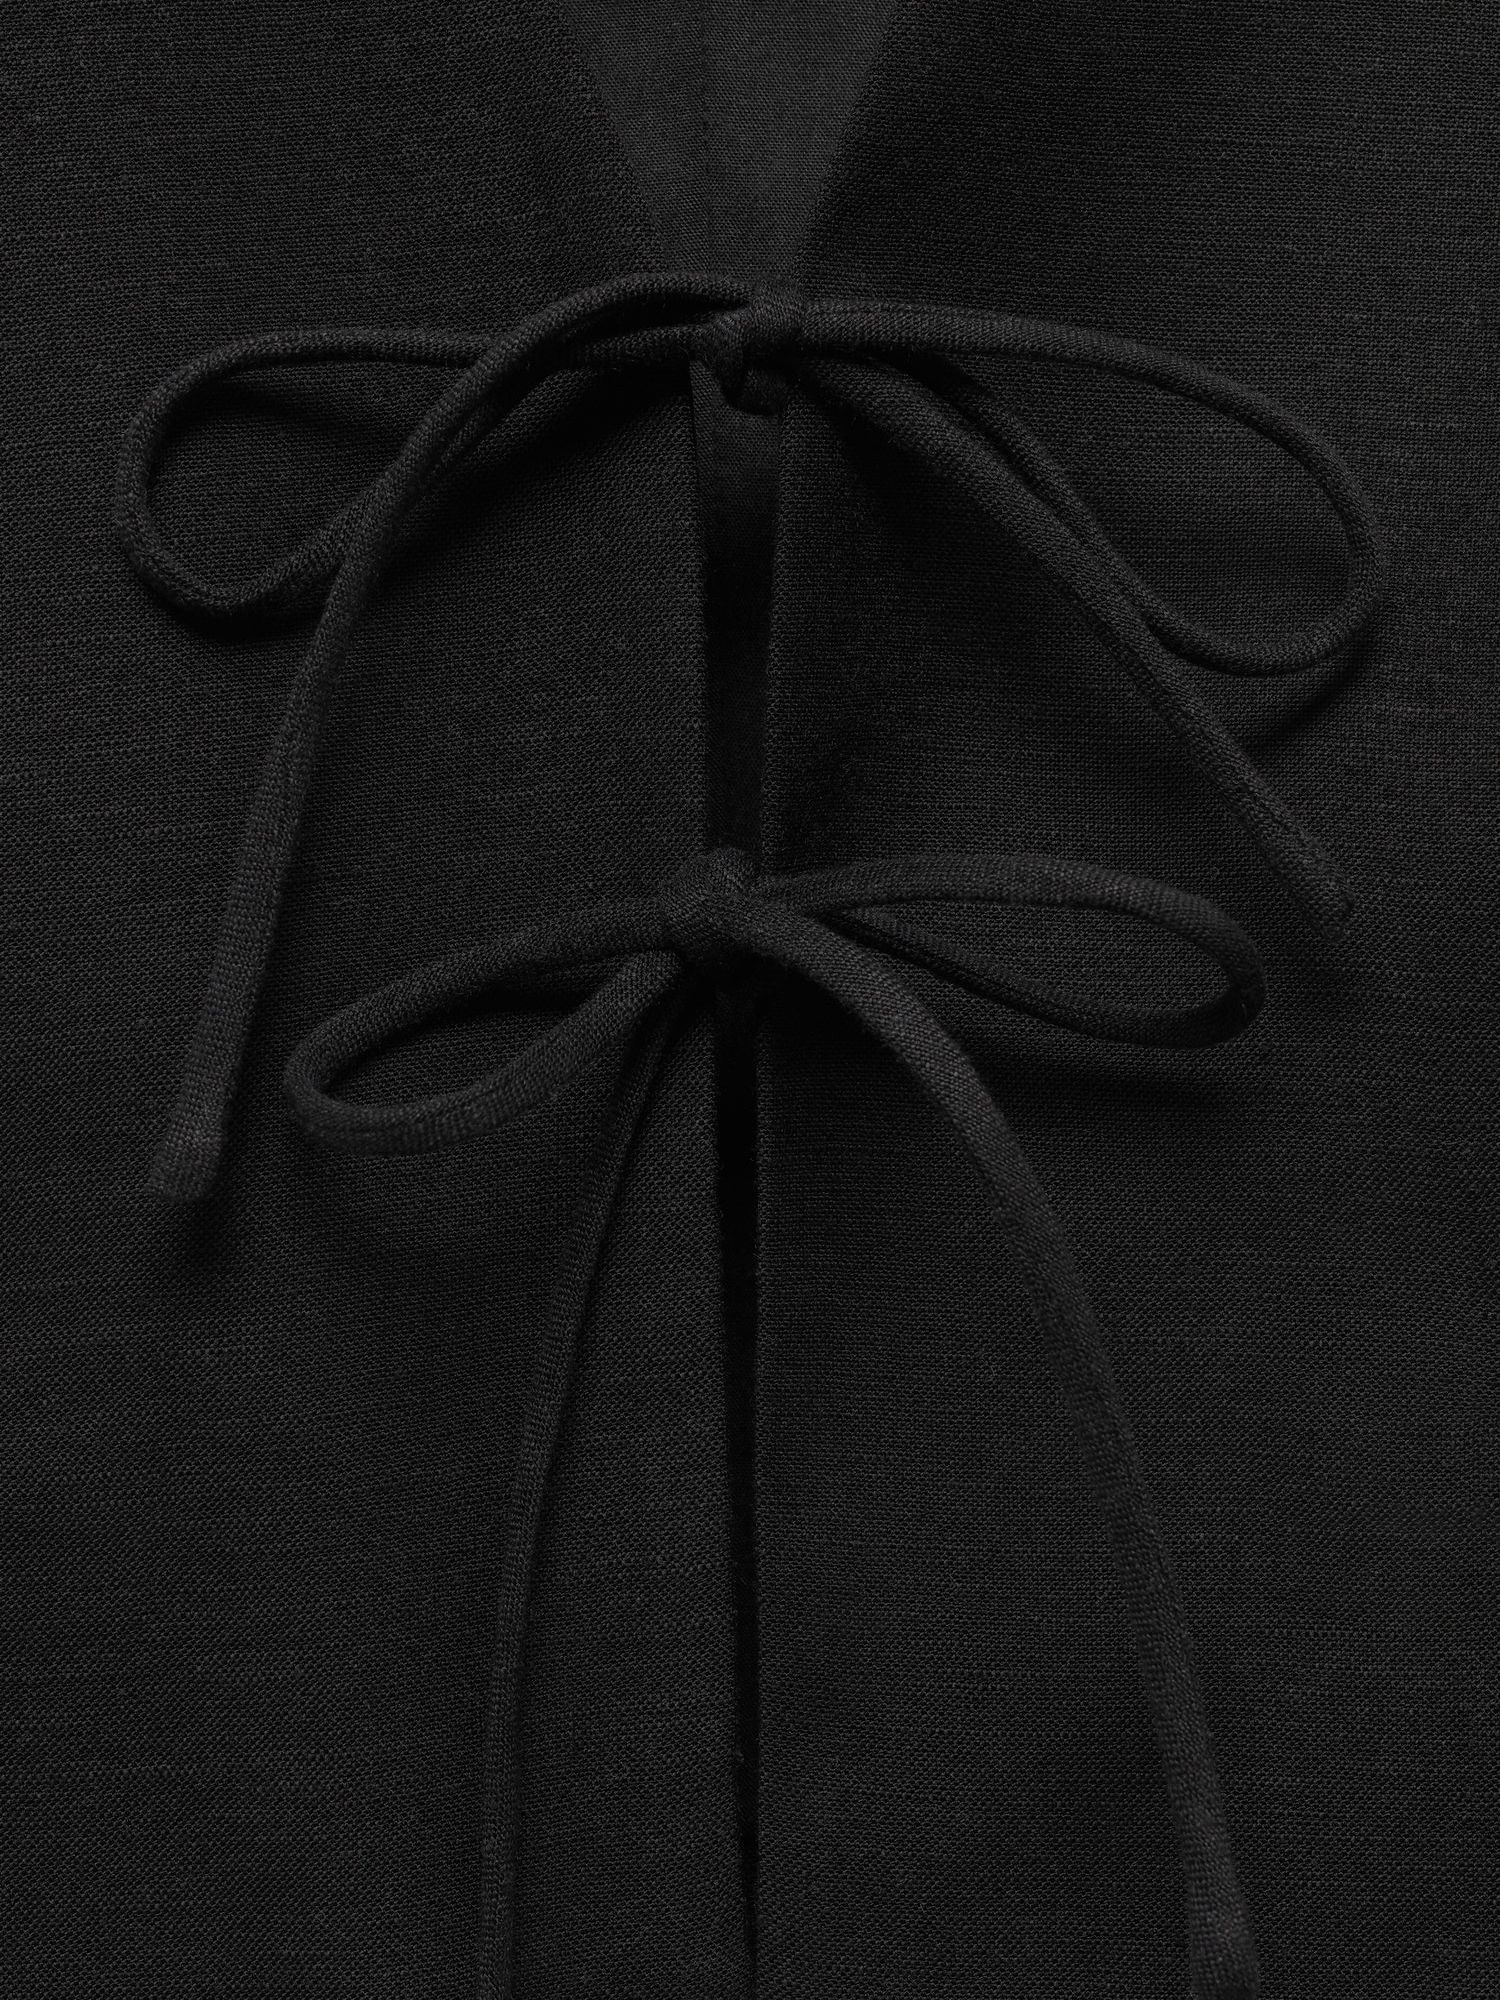 Mango Lago Linen Blend Tie Closure Waistcoat, Black, L